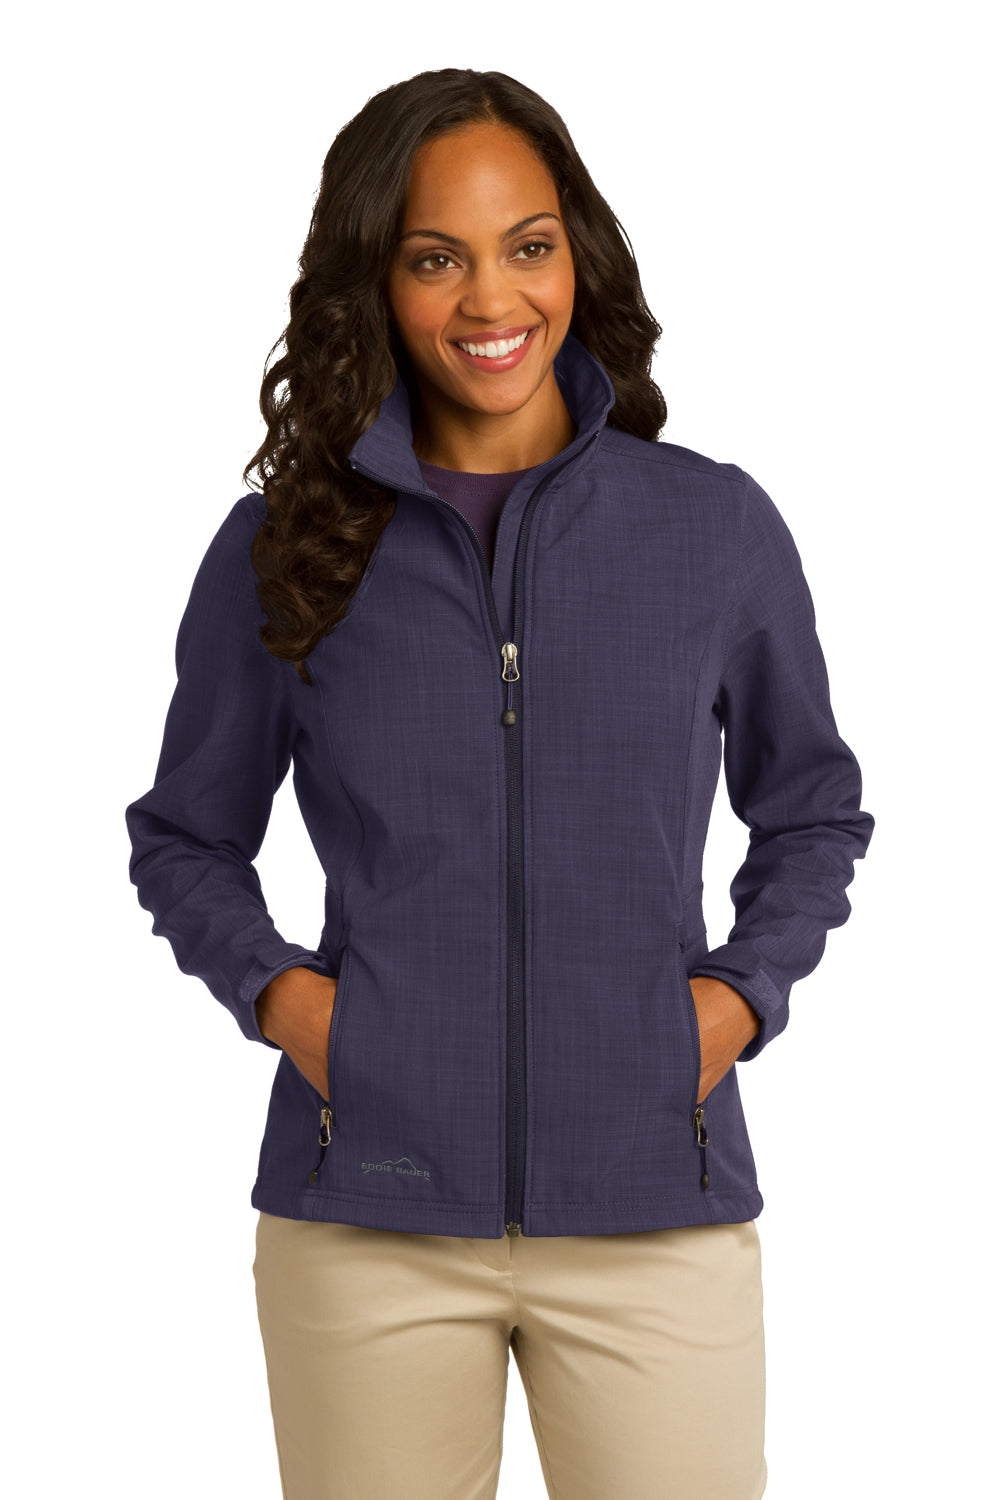 Eddie Bauer EB533 Womens Shaded Crosshatch Wind & Water Resistant Full Zip Jacket Purple Front